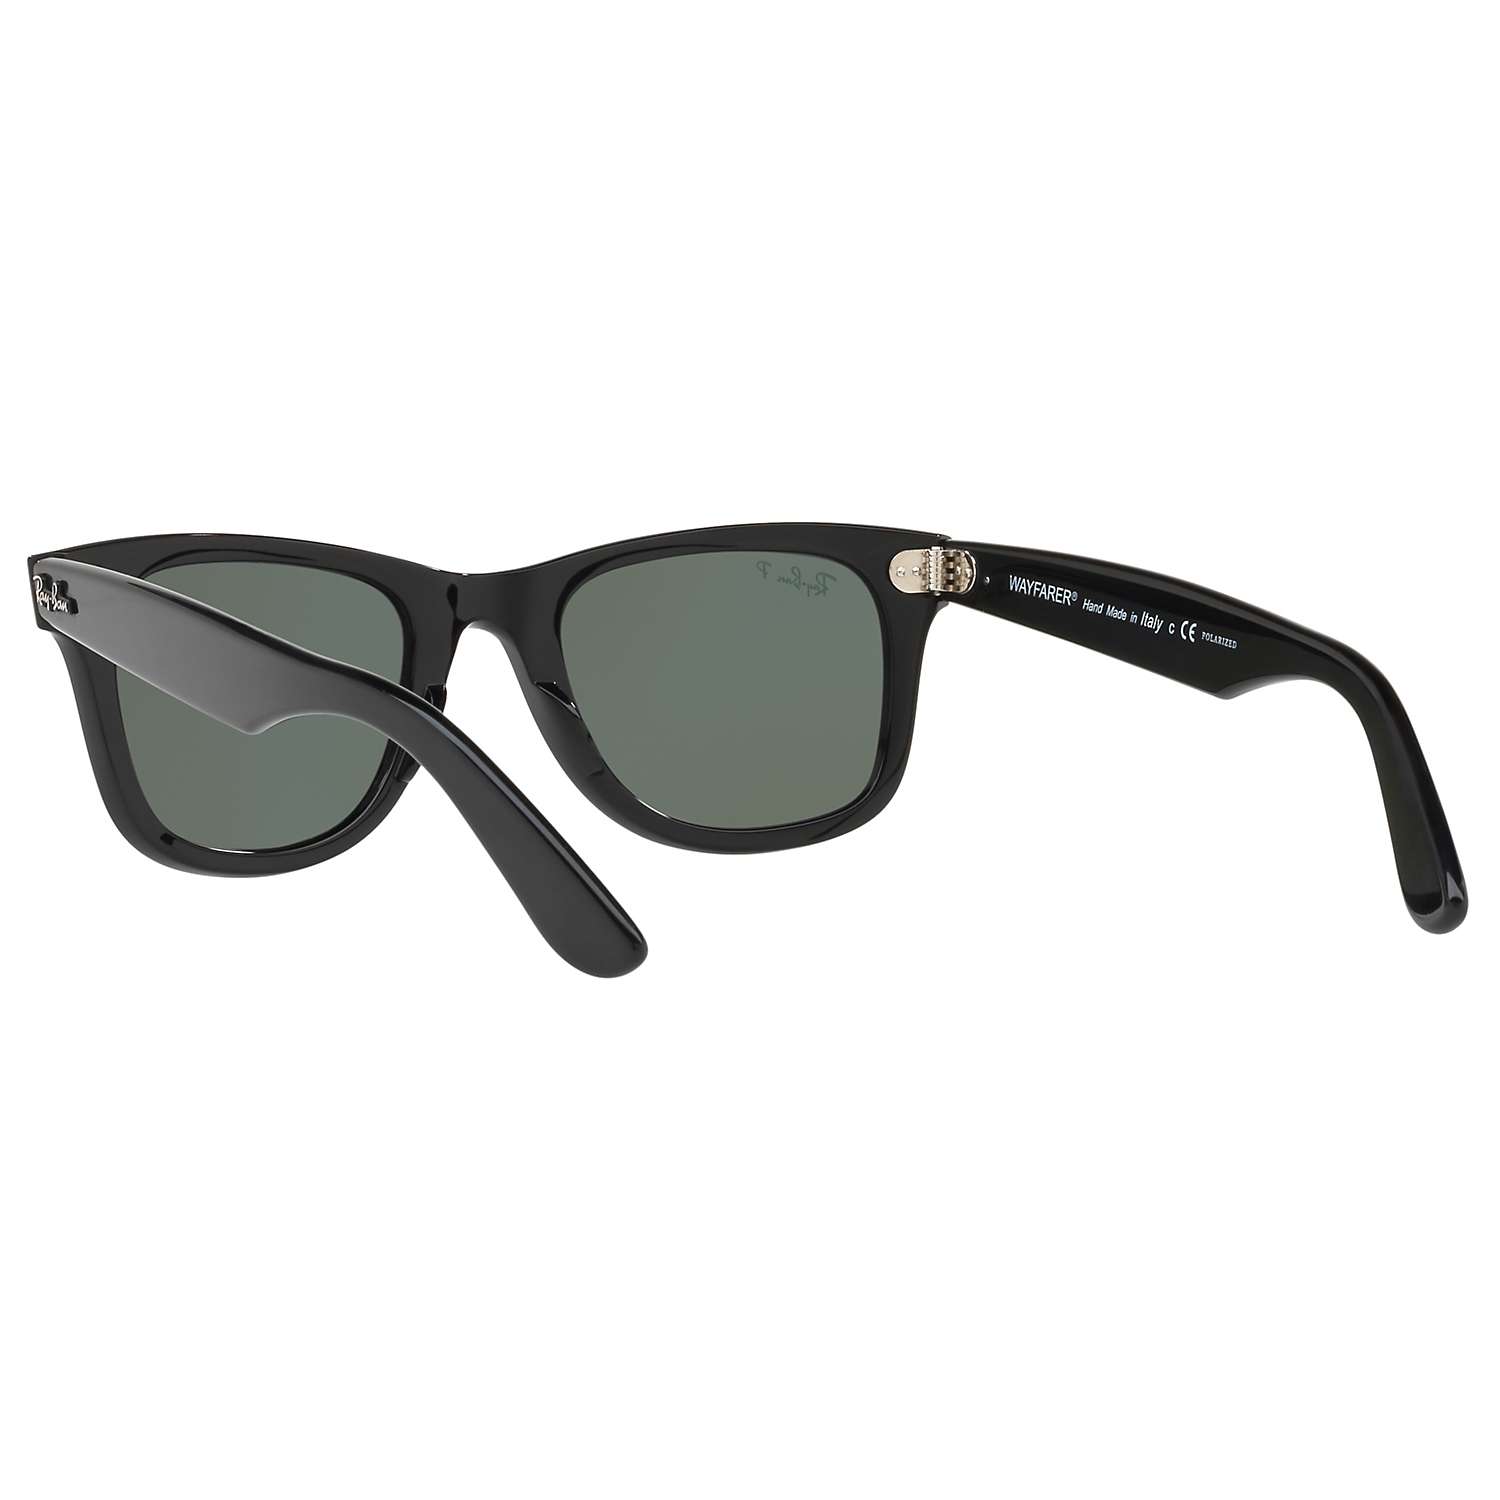 Buy Ray-Ban RB4340 Polarised Wayfarer Sunglasses, Black/Grey Online at johnlewis.com